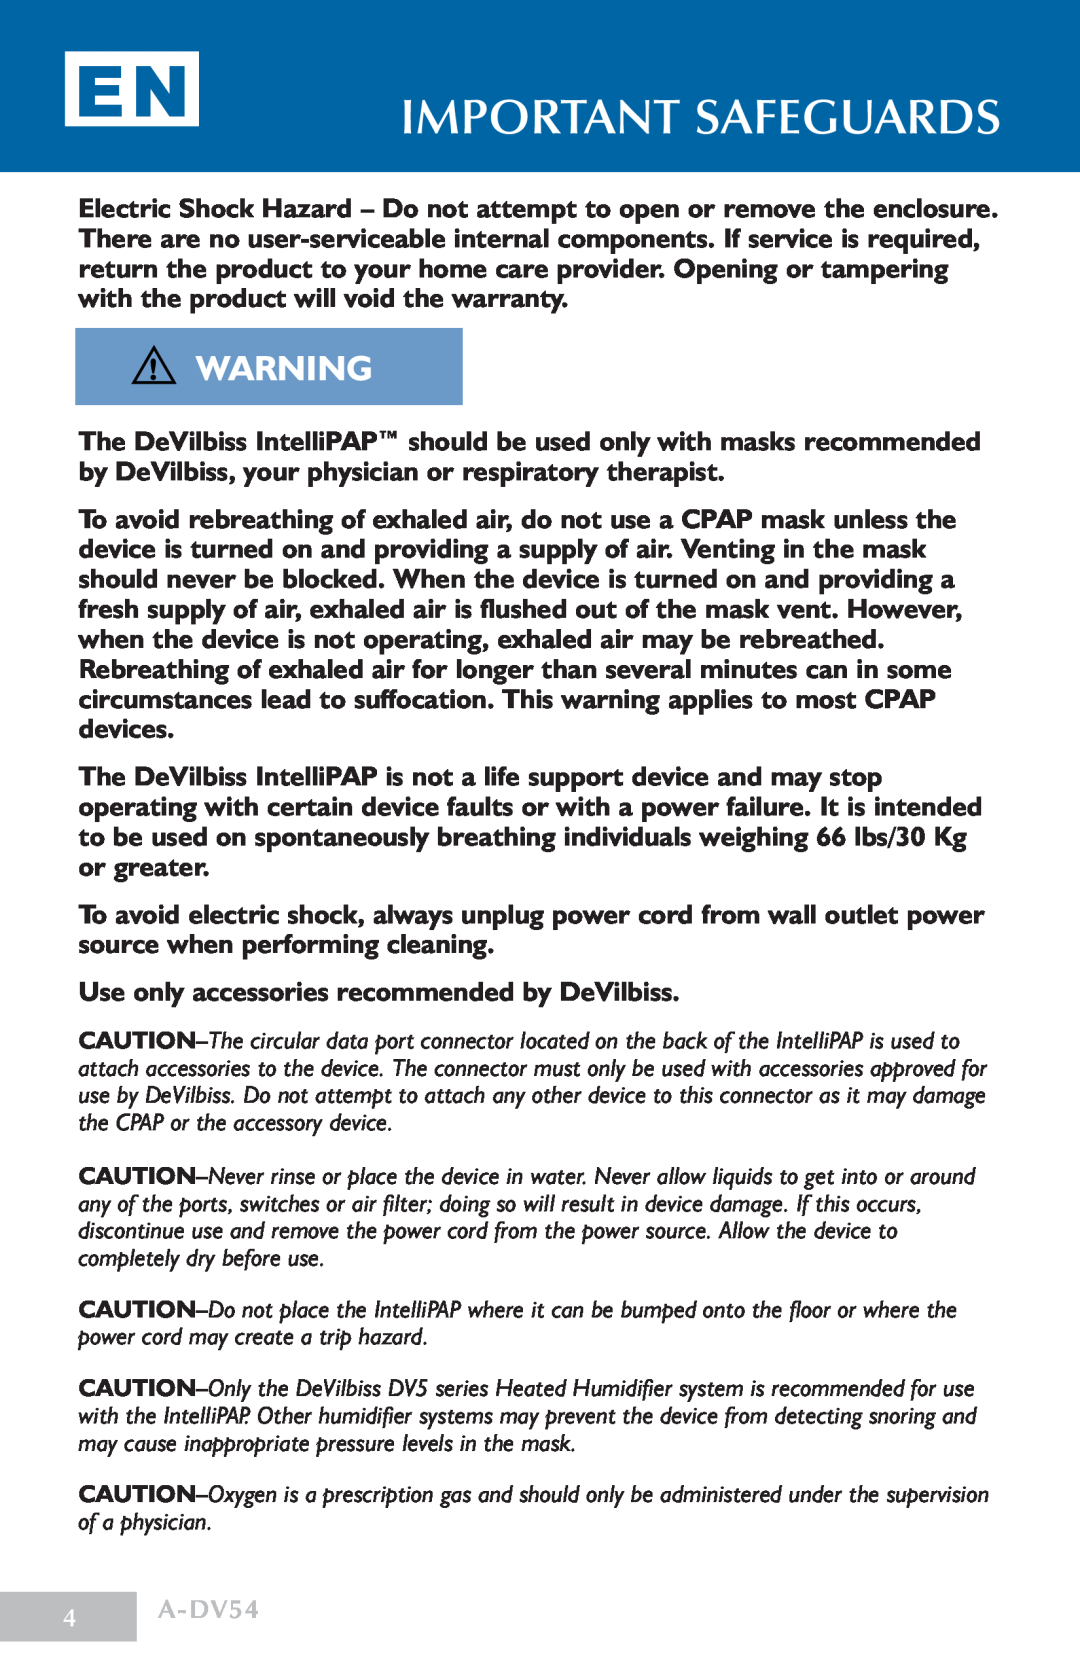 DeVillbiss Air Power Company manual important safeguards, A-DV54 